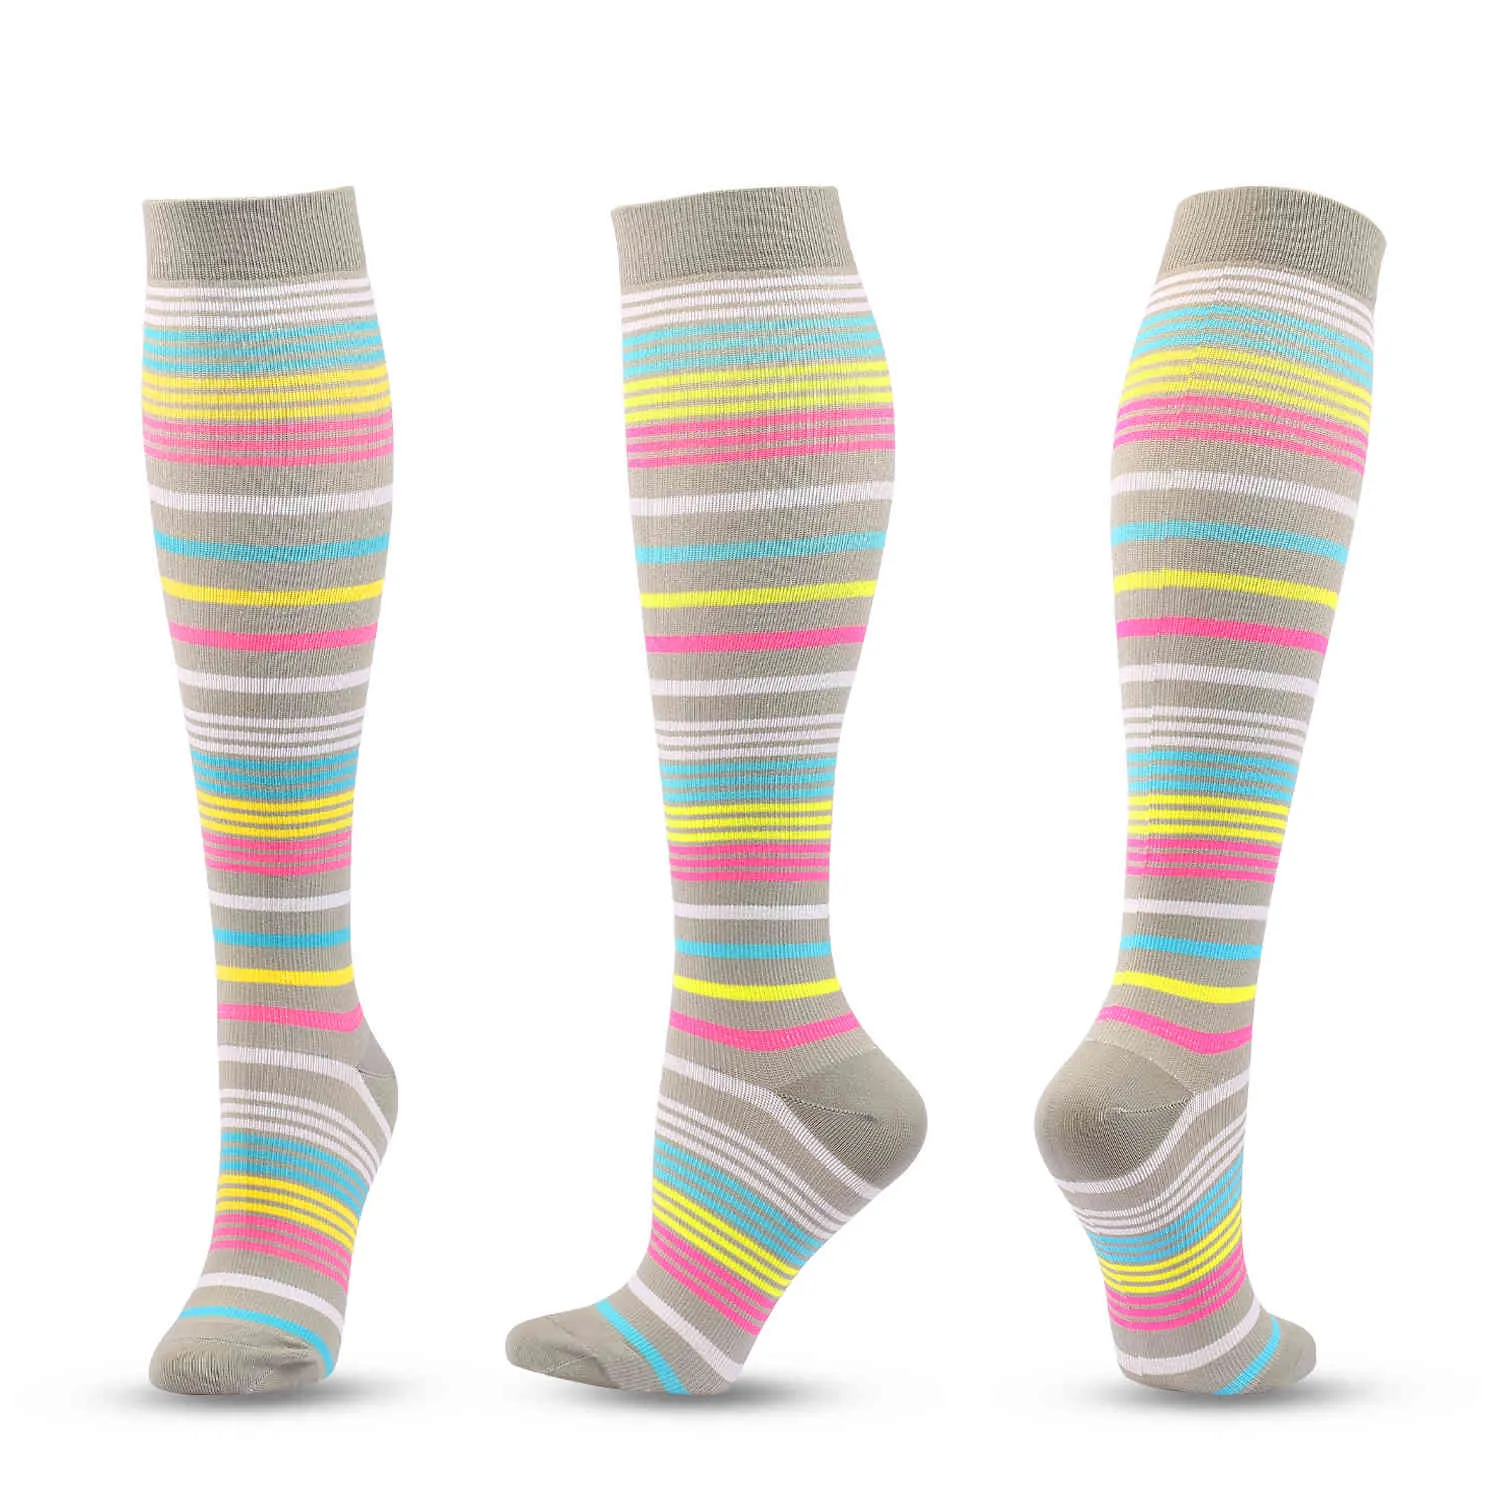 Medias de compresión Mujeres calcetines de presión compresa deportes gris claro de amor oscuro rayas patrón de pingüino nylon diversión SM2974173